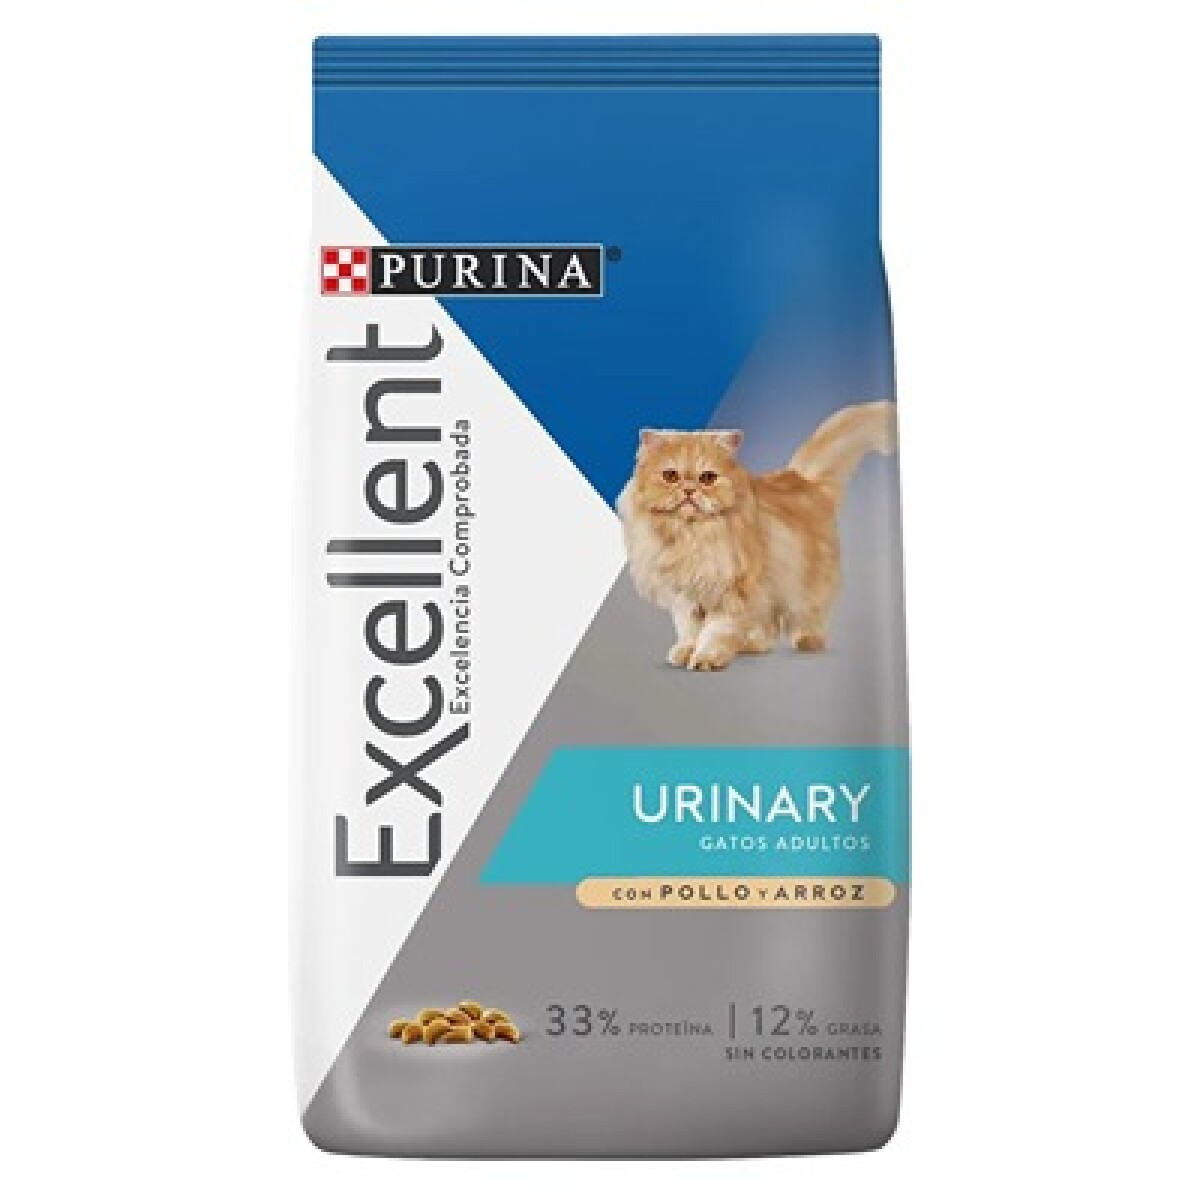 EXCELLENT CAT URINARY 1 KG. - Unica 